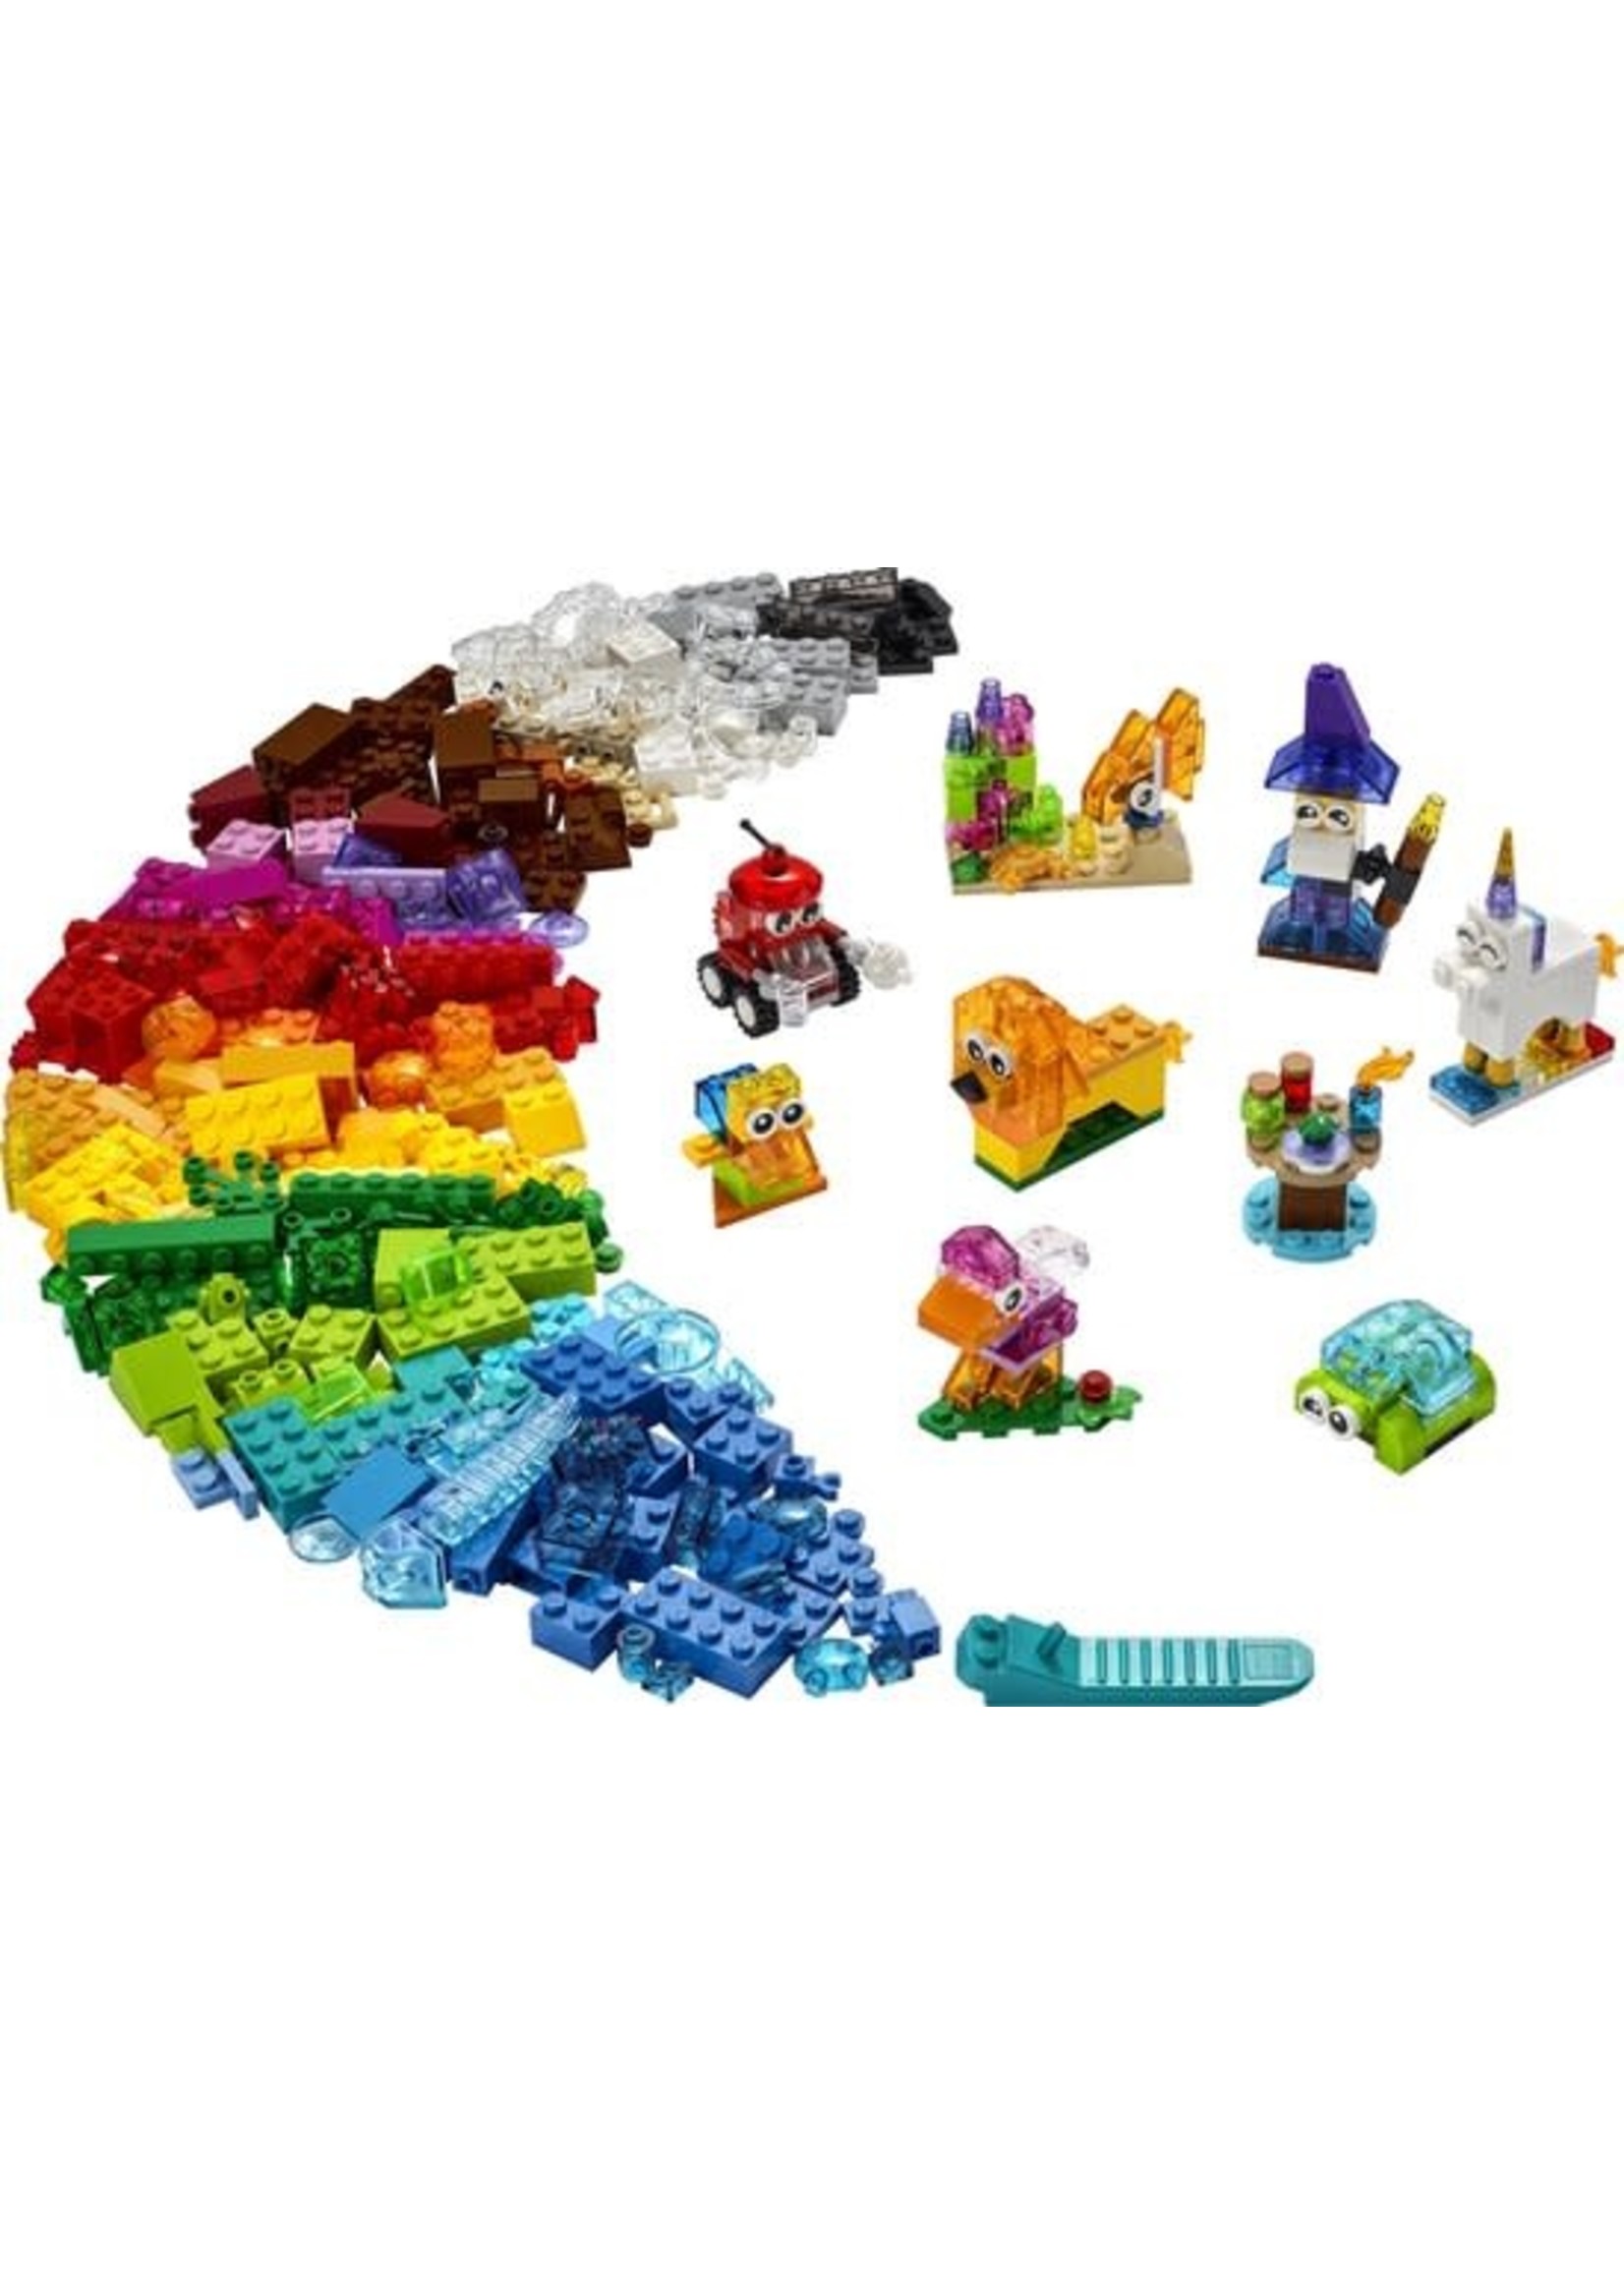 Lego Lego Classic 11013 Creatieve transparante stenen